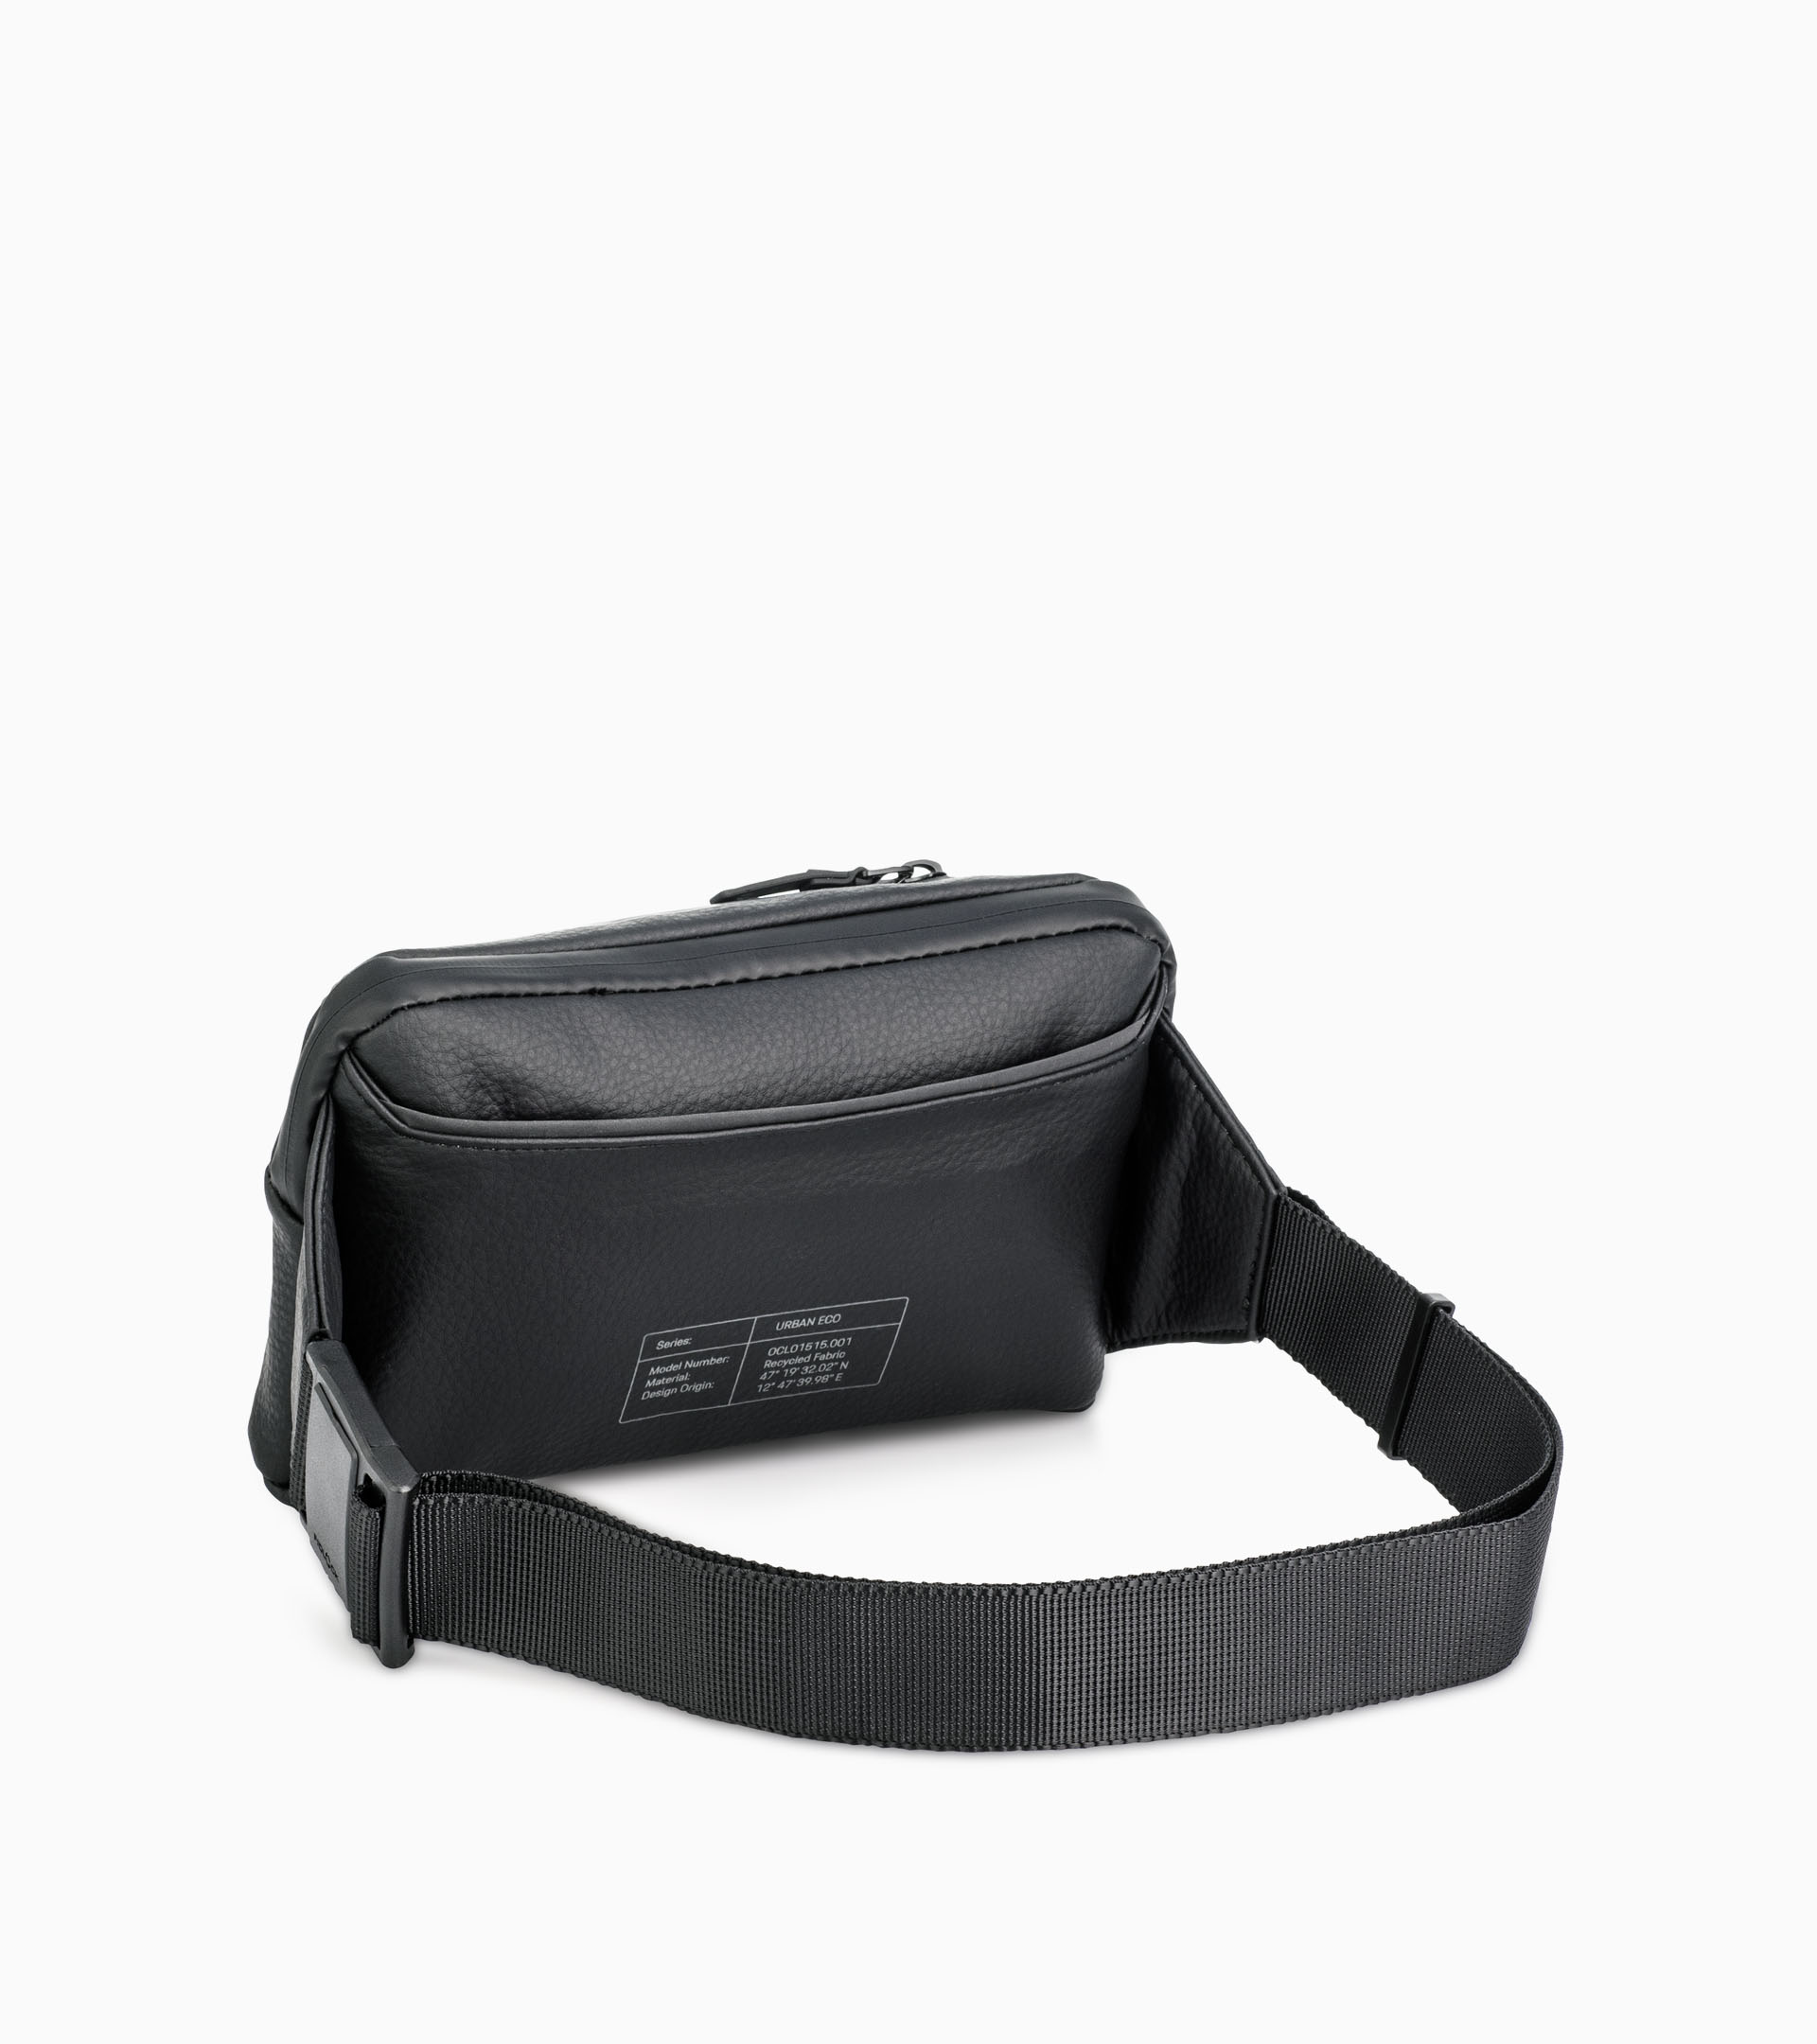 Urban Eco RL Belt Bag black - Men\'s Shoulder Bag - Practical & Comfortable  | Porsche Design | Porsche Design | Gürtel